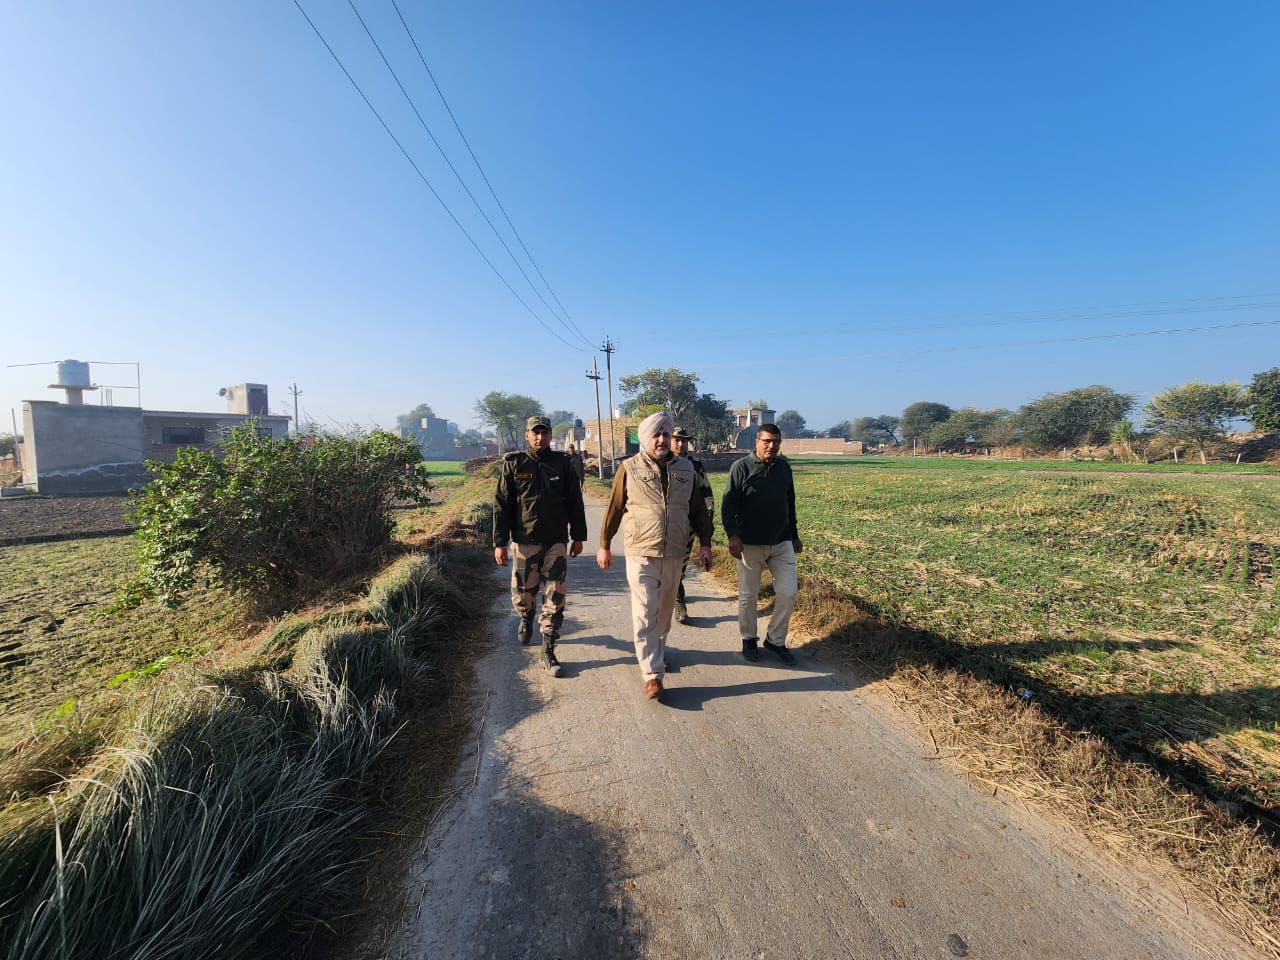 Joint Search Operation: BSF ਤੇ ਪੰਜਾਬ ਪੁਲਿਸ ਦੇ ਜਵਾਨਾਂ ਦਾ ਸਰਹੱਦੀ ਇਲਾਕੇ 'ਚ ਸਰਚ ਆਪ੍ਰੇਸ਼ਨ, ਫਾਜ਼ਿਲਕਾ ਦਾ ਇਲਾਕਾ ਫੌਜ ਨਾਲ ਭਰਿਆ